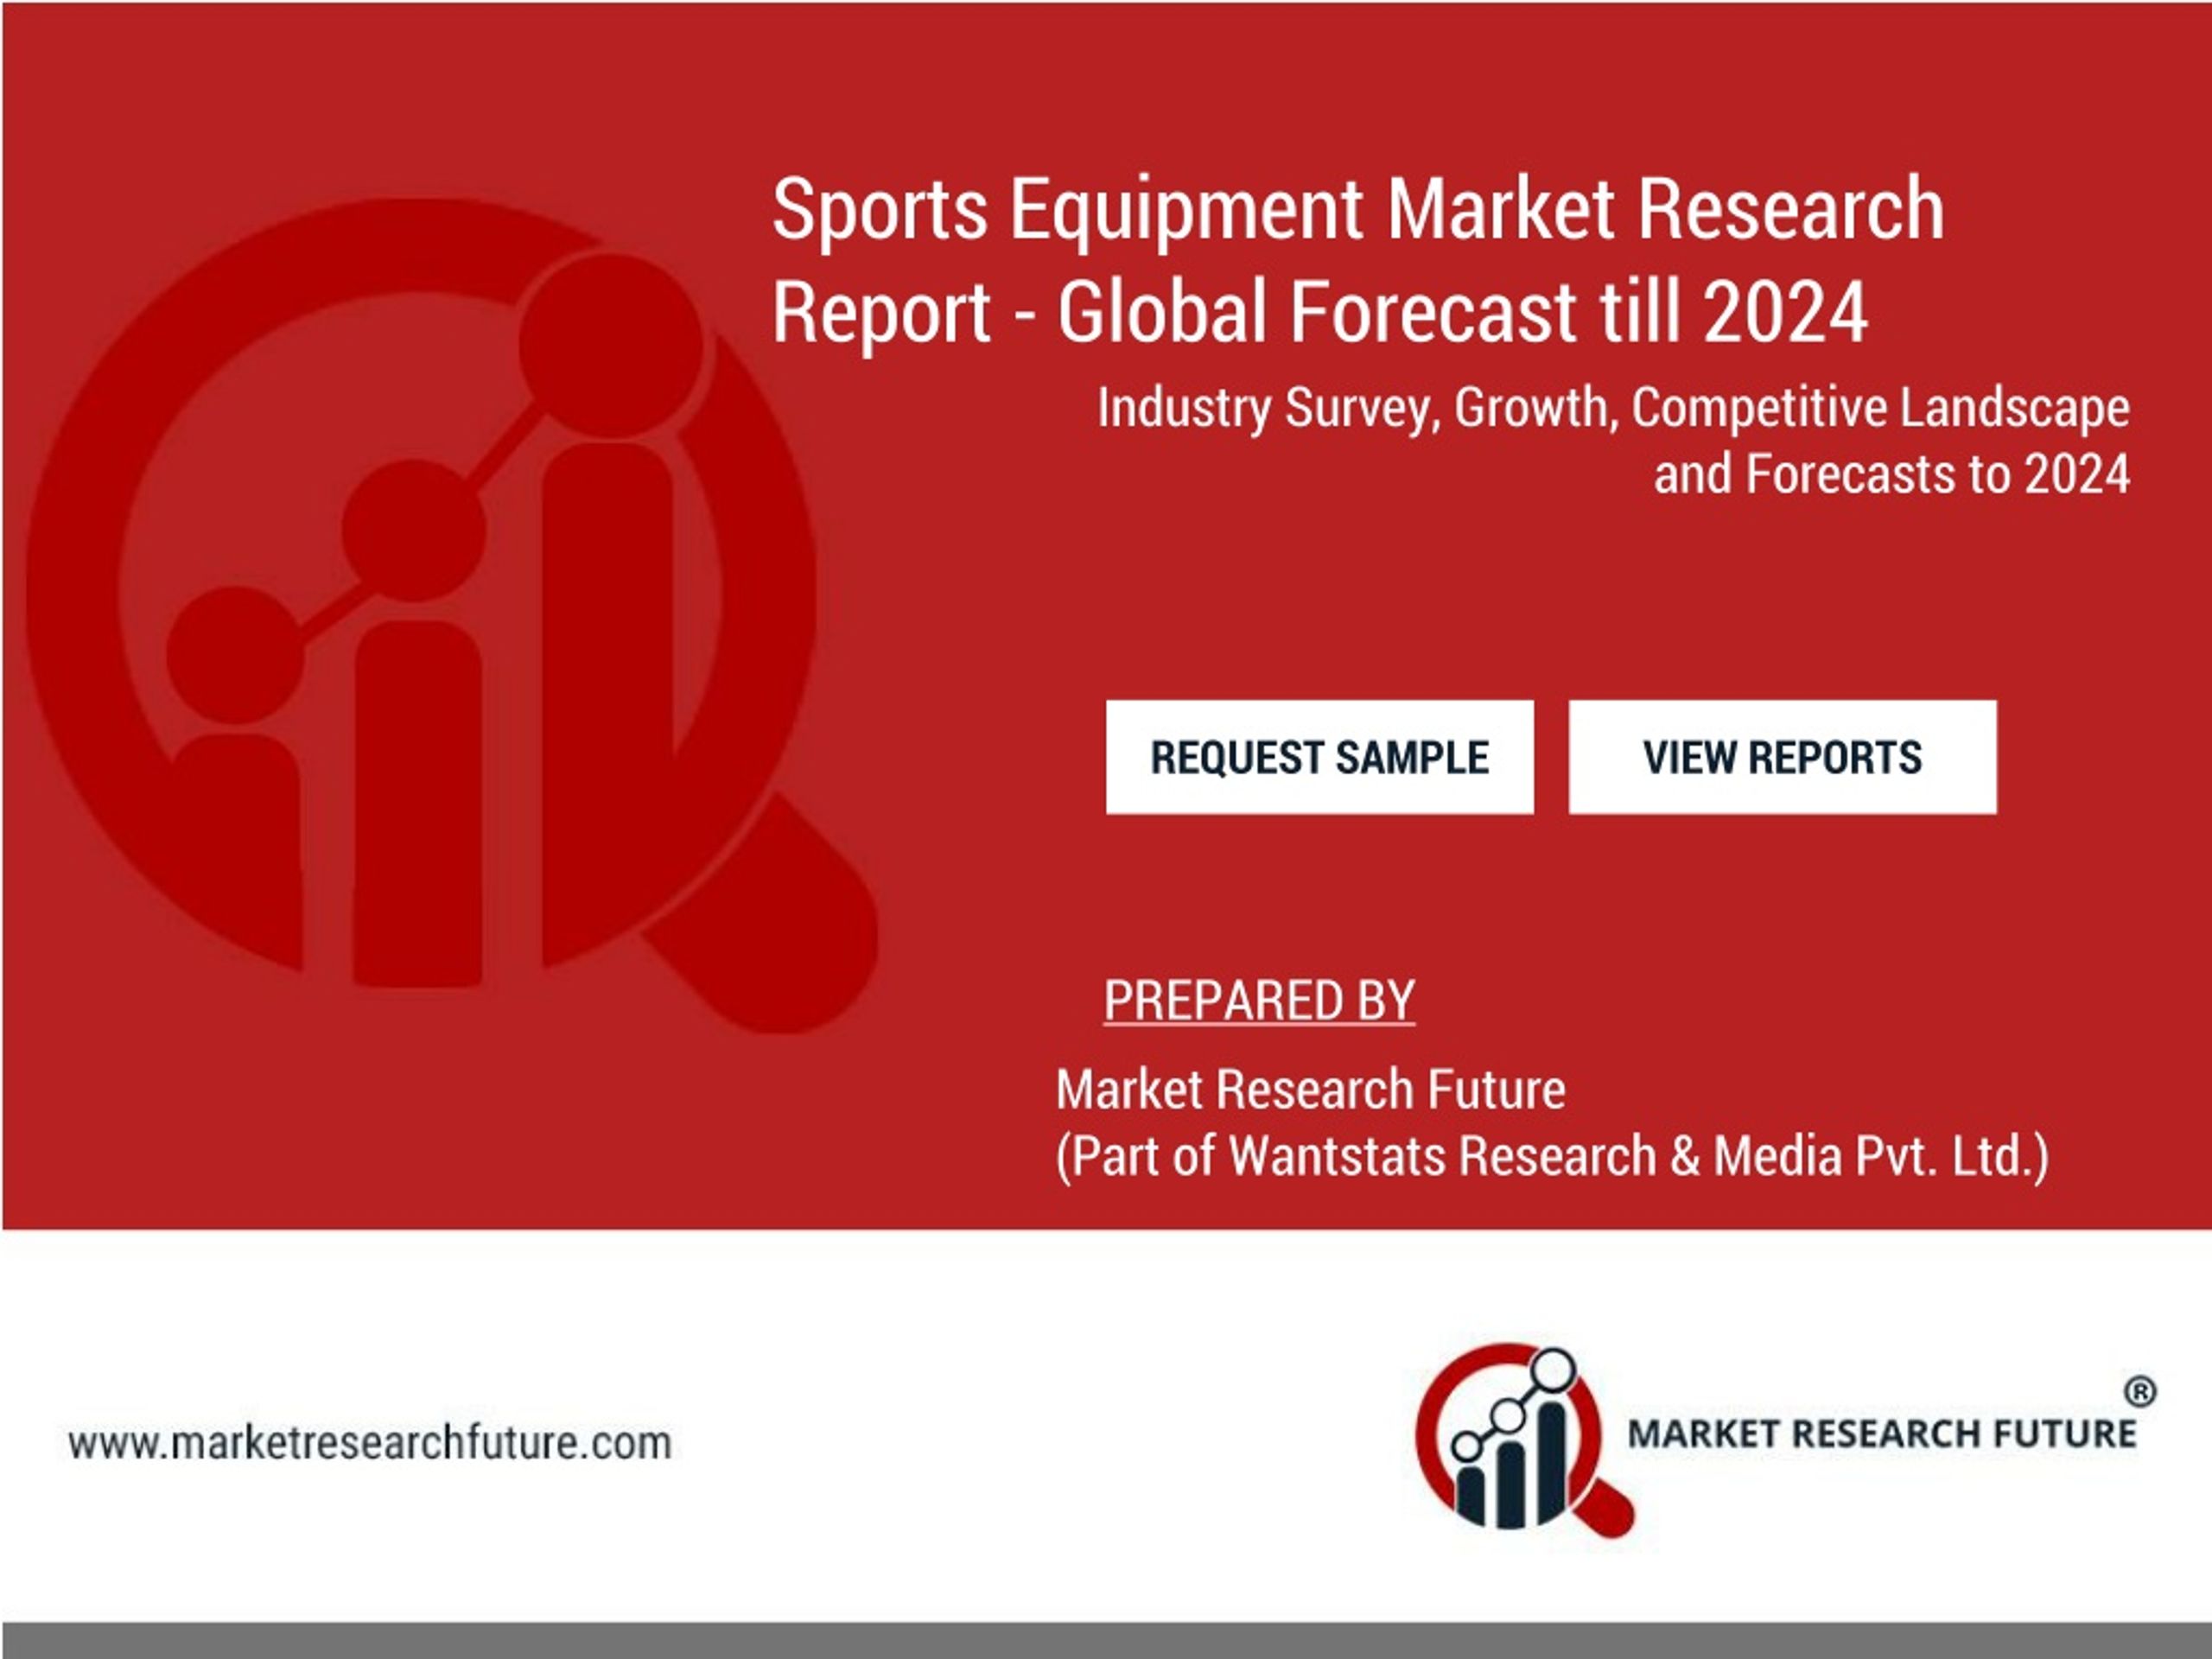 Smart Underwear Market Research Report 2018-2025